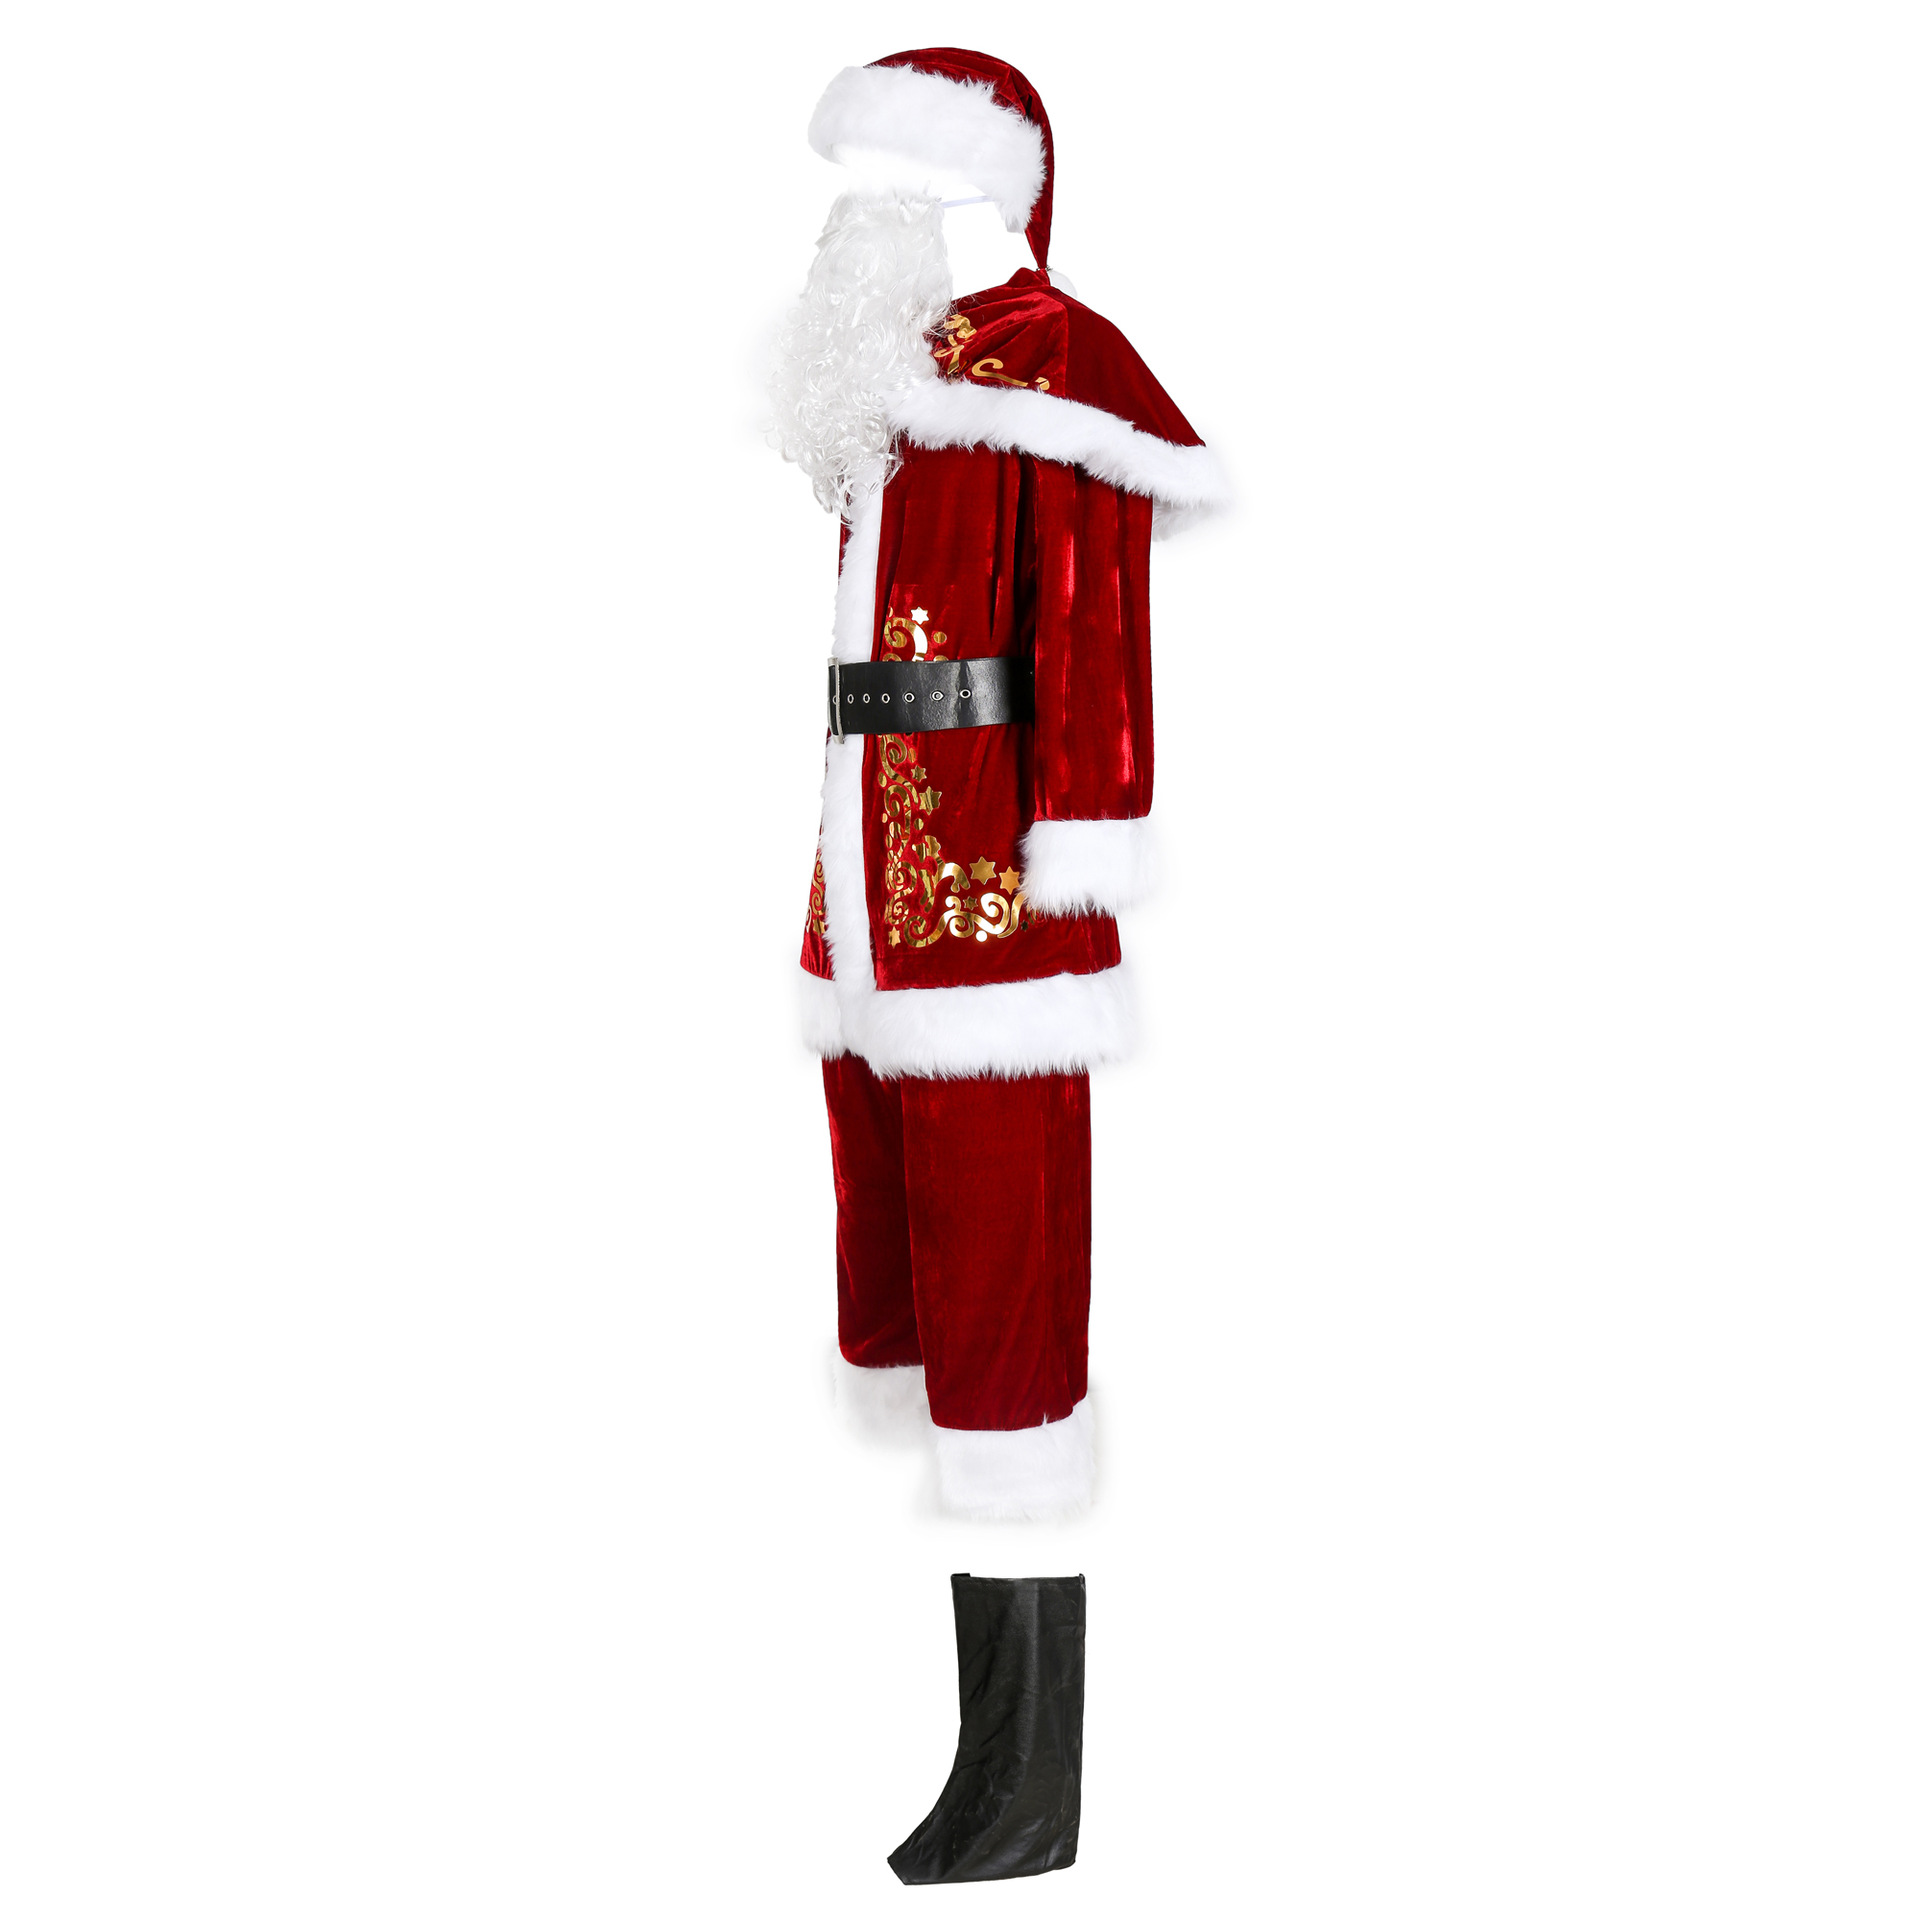 Men's Santa Claus Clothing Printed Christmas Clothing Set